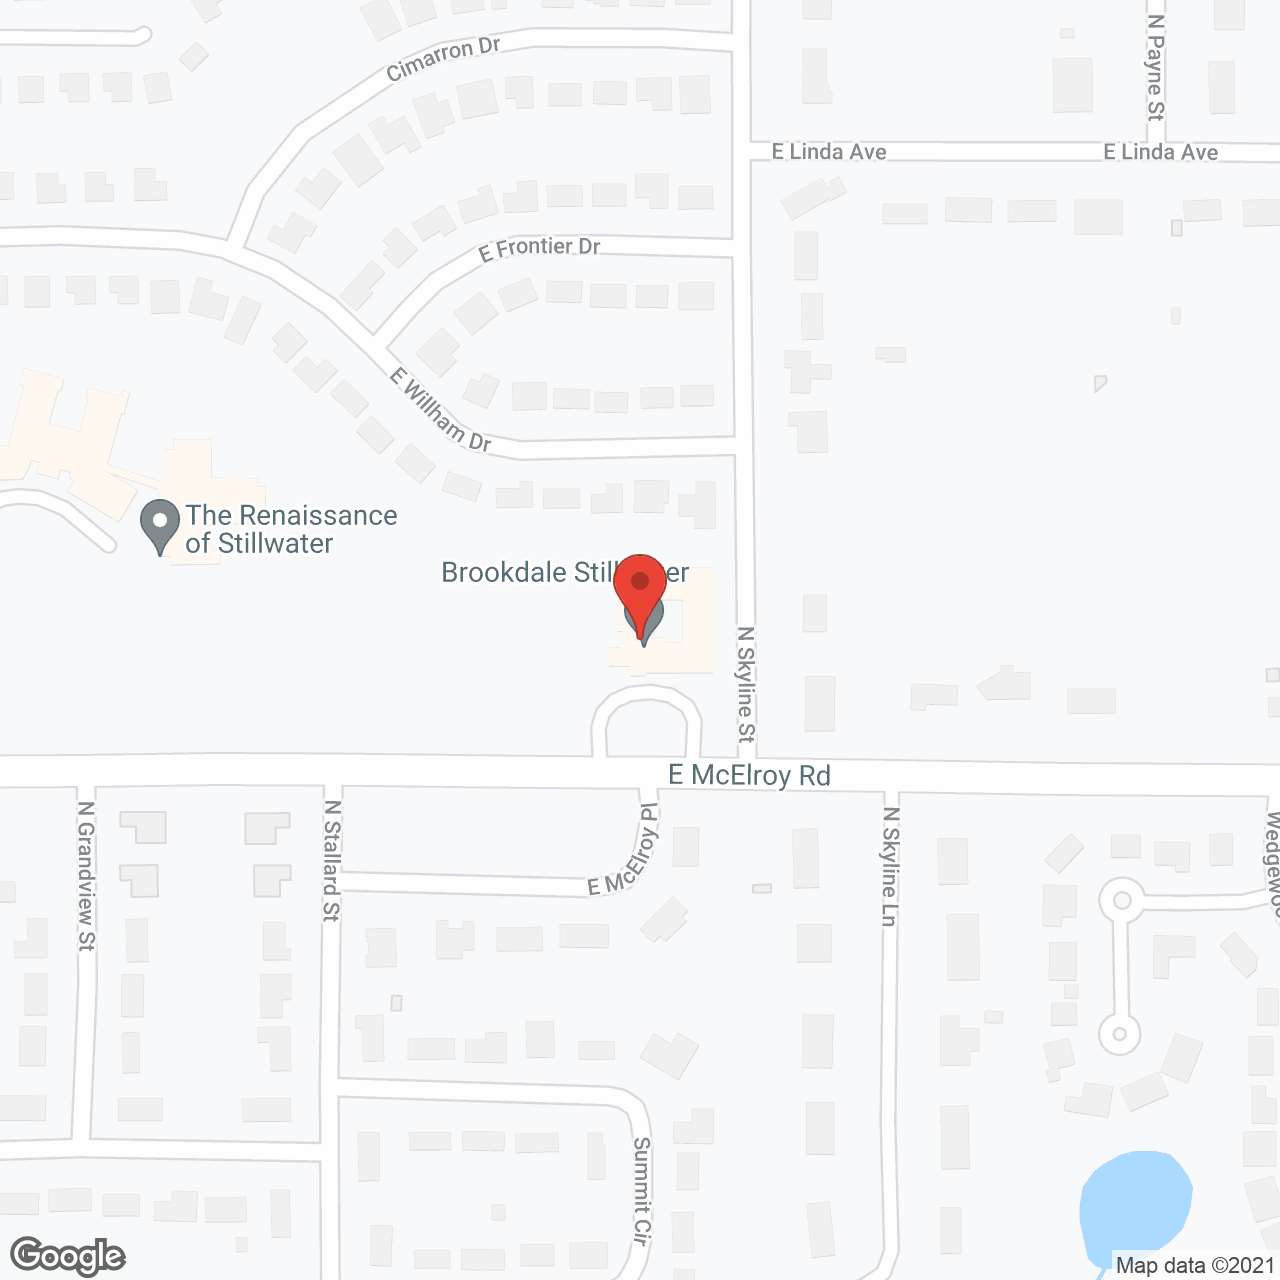 Brookdale Stillwater in google map